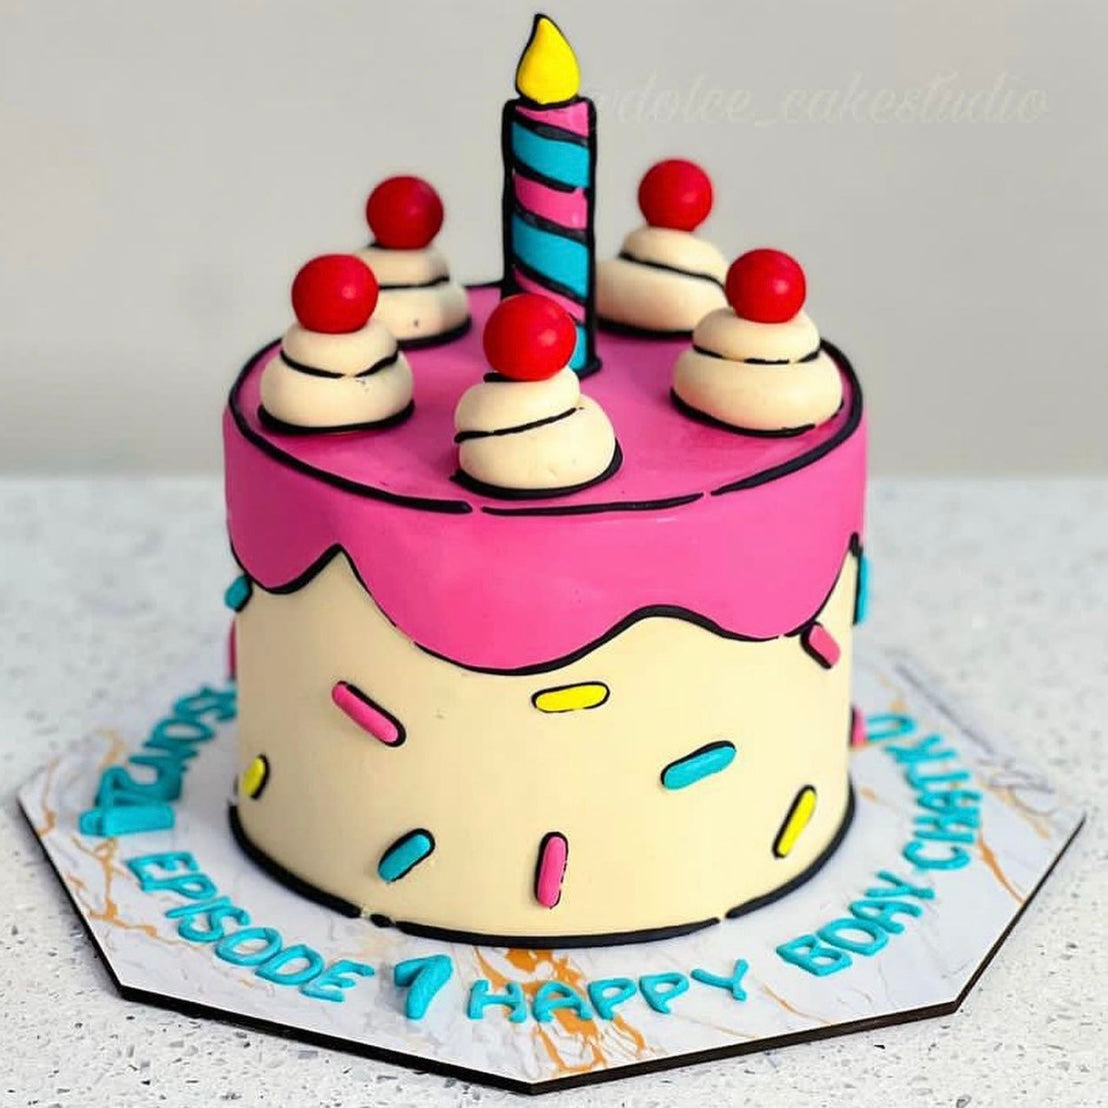 Design your own Celebration Cake